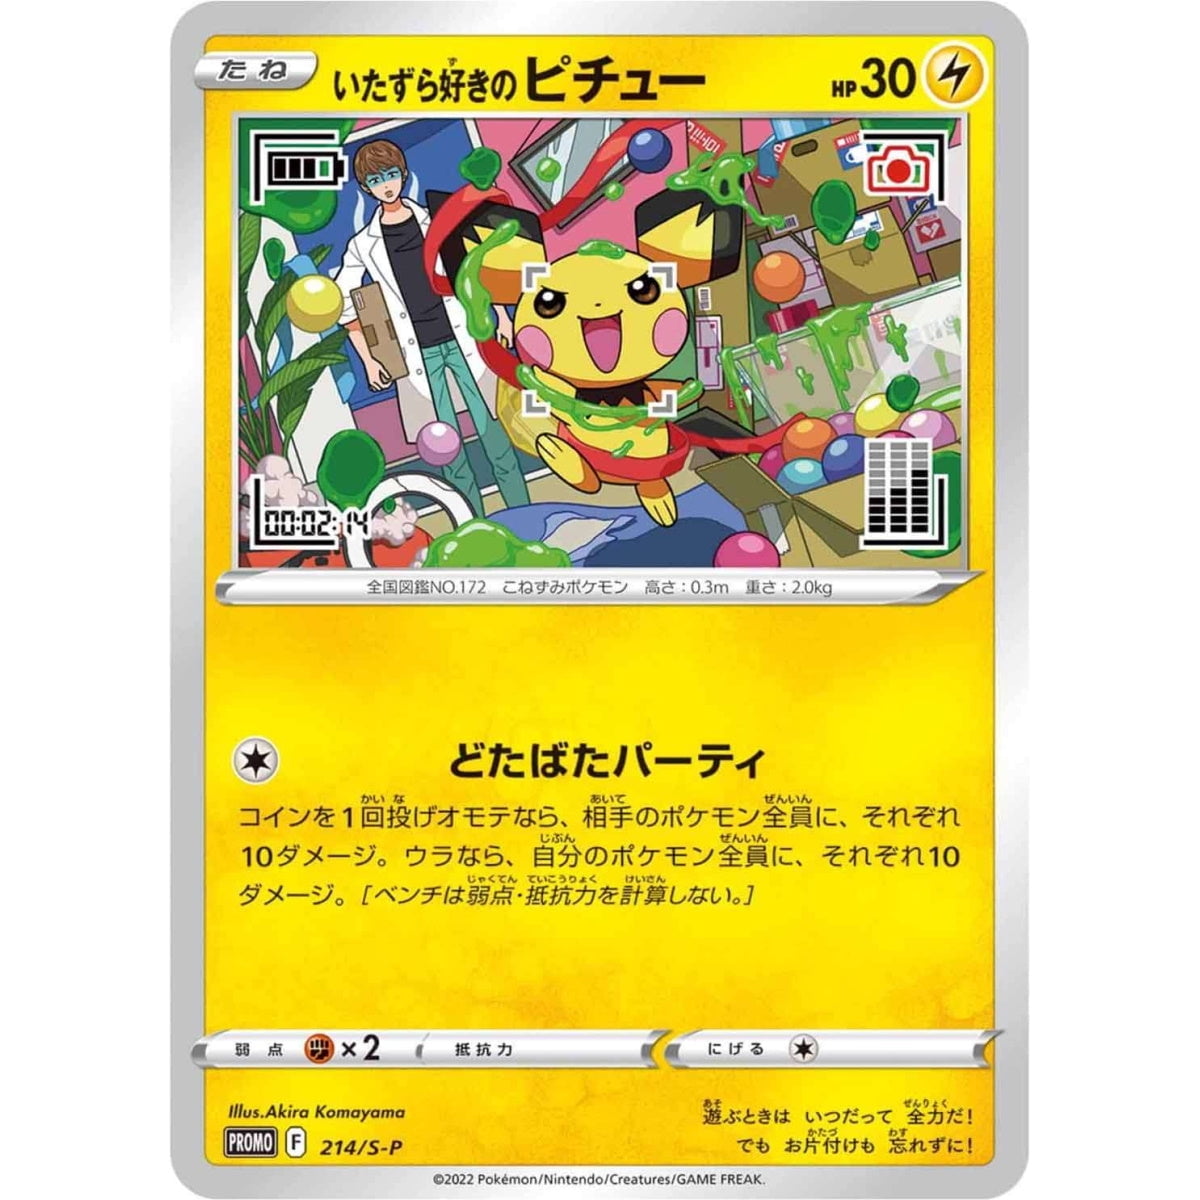 Pikachu Ditto GX Custom Made Card 